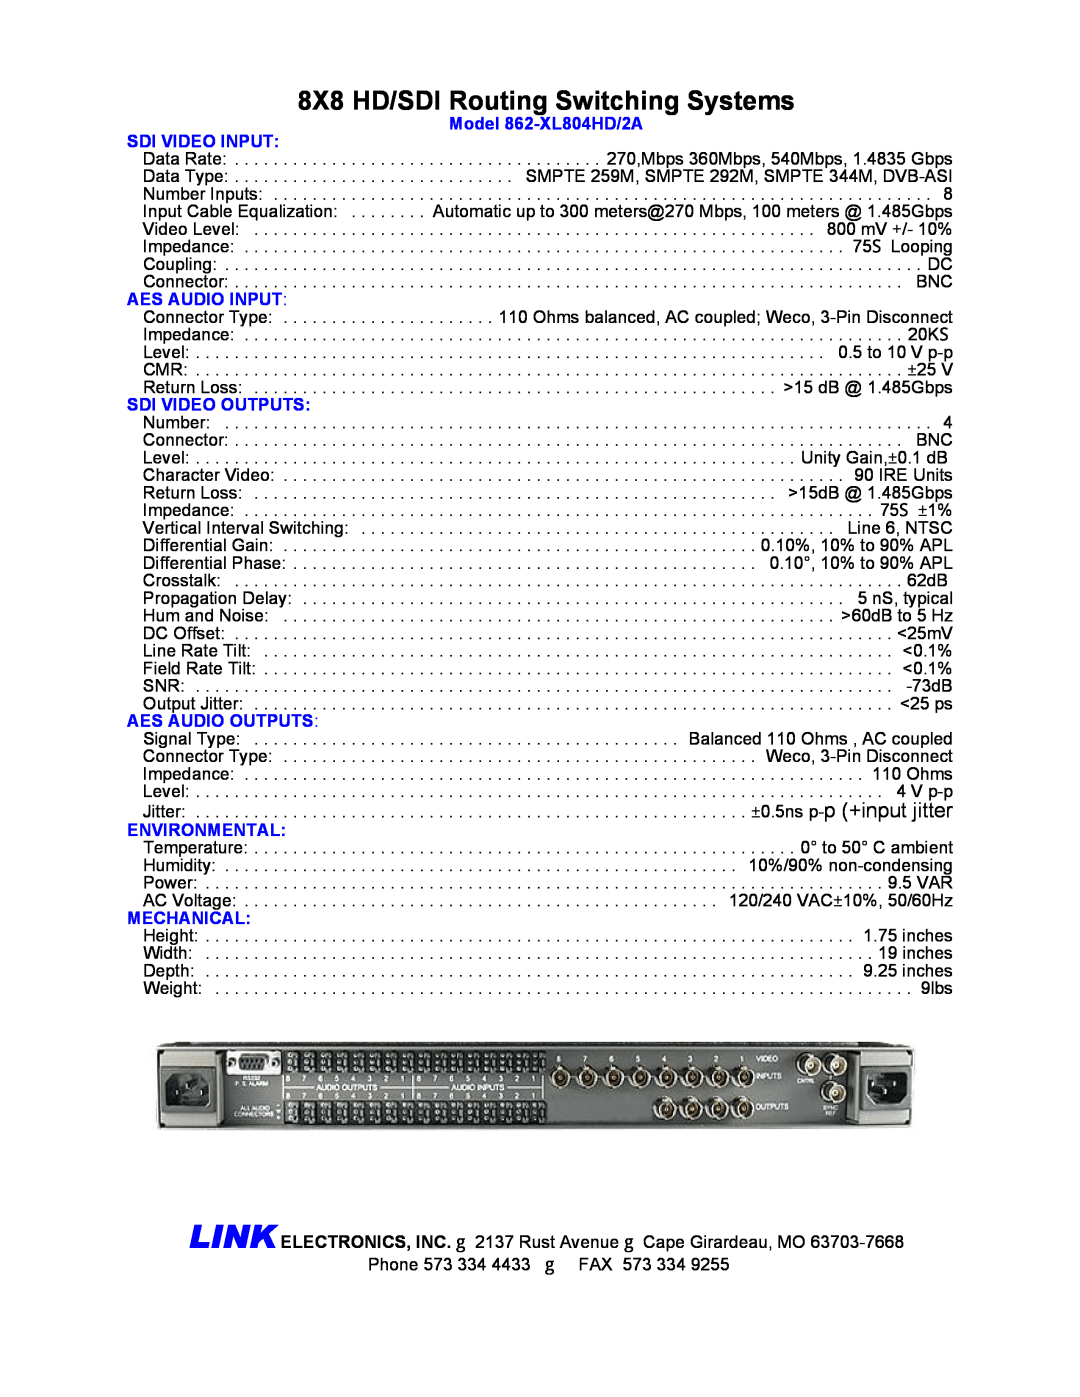 Link electronic Model 862-XL804HD/2A SDI VIDEO INPUT, Sdi Video Outputs, Aes Audio Outputs, Environmental, Mechanical 